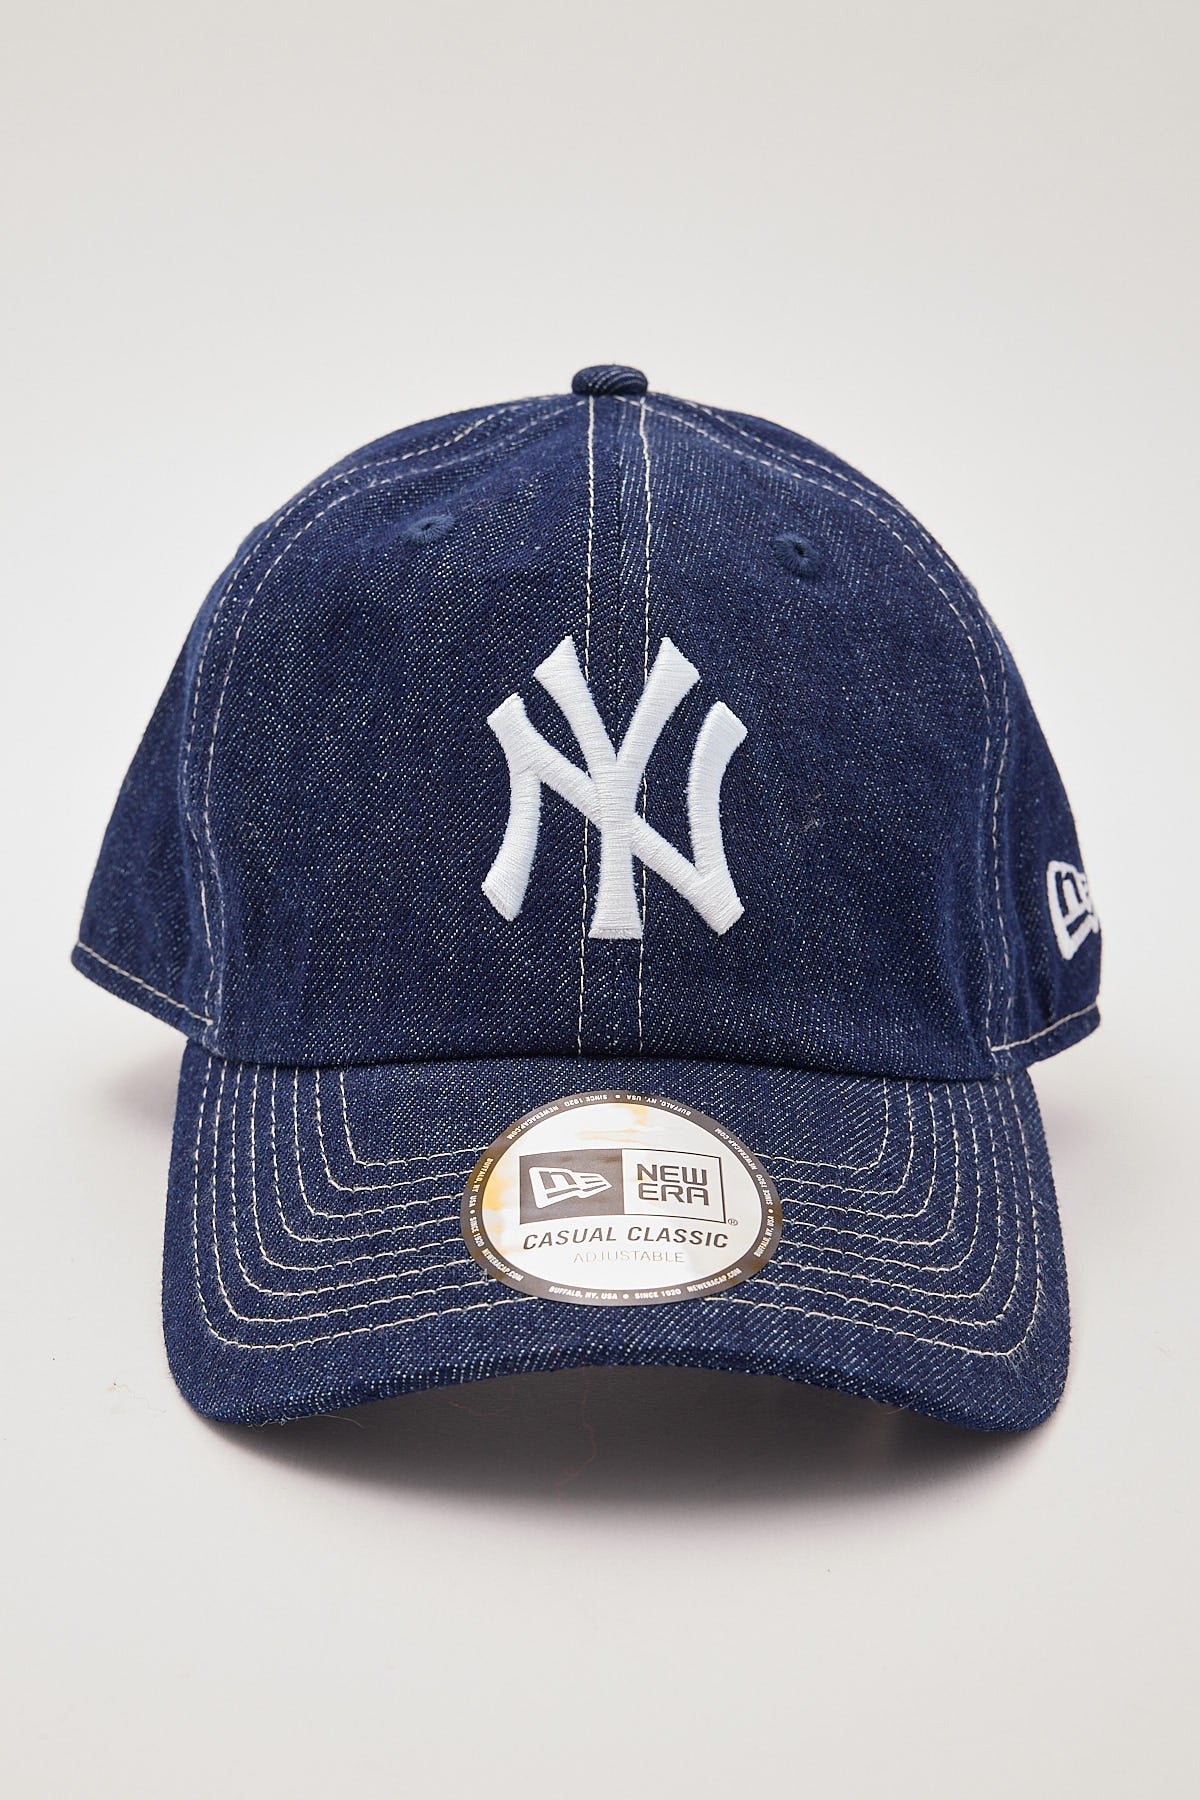 New Era Casual Classic NY Yankees Washed Denim